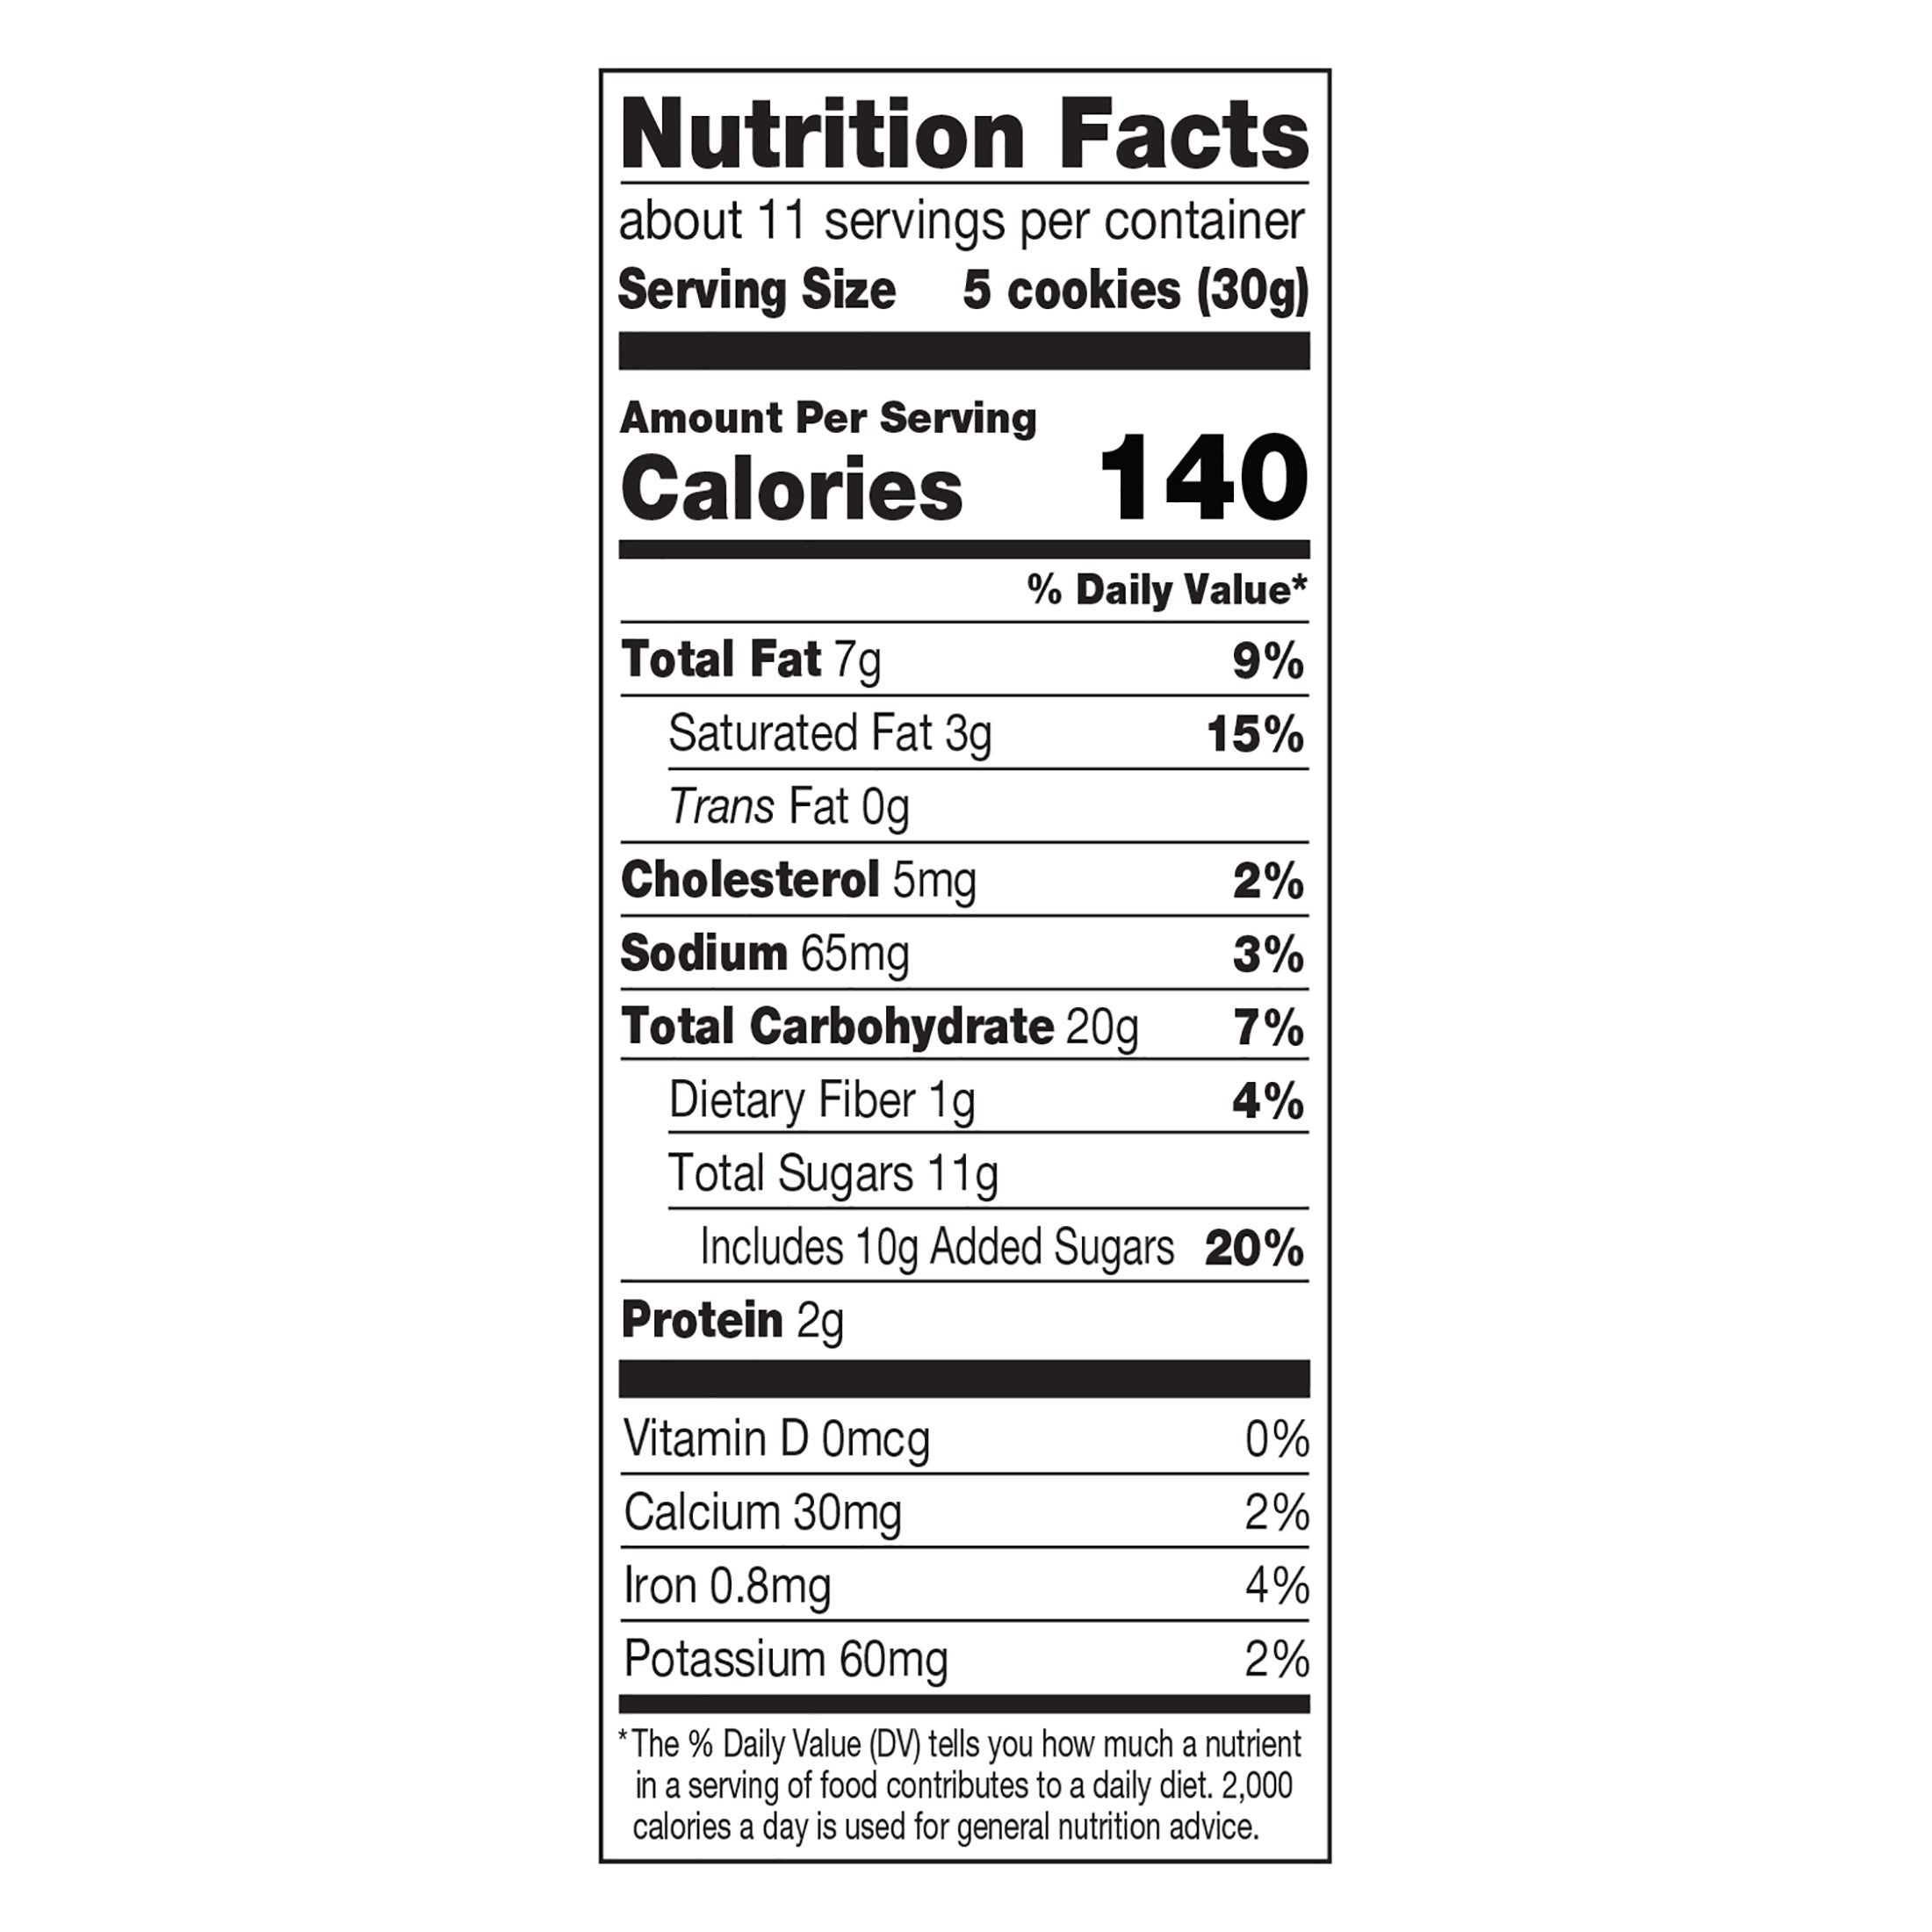 Stauffer's Stars Milk Chocolate 10oz Box nutritional facts